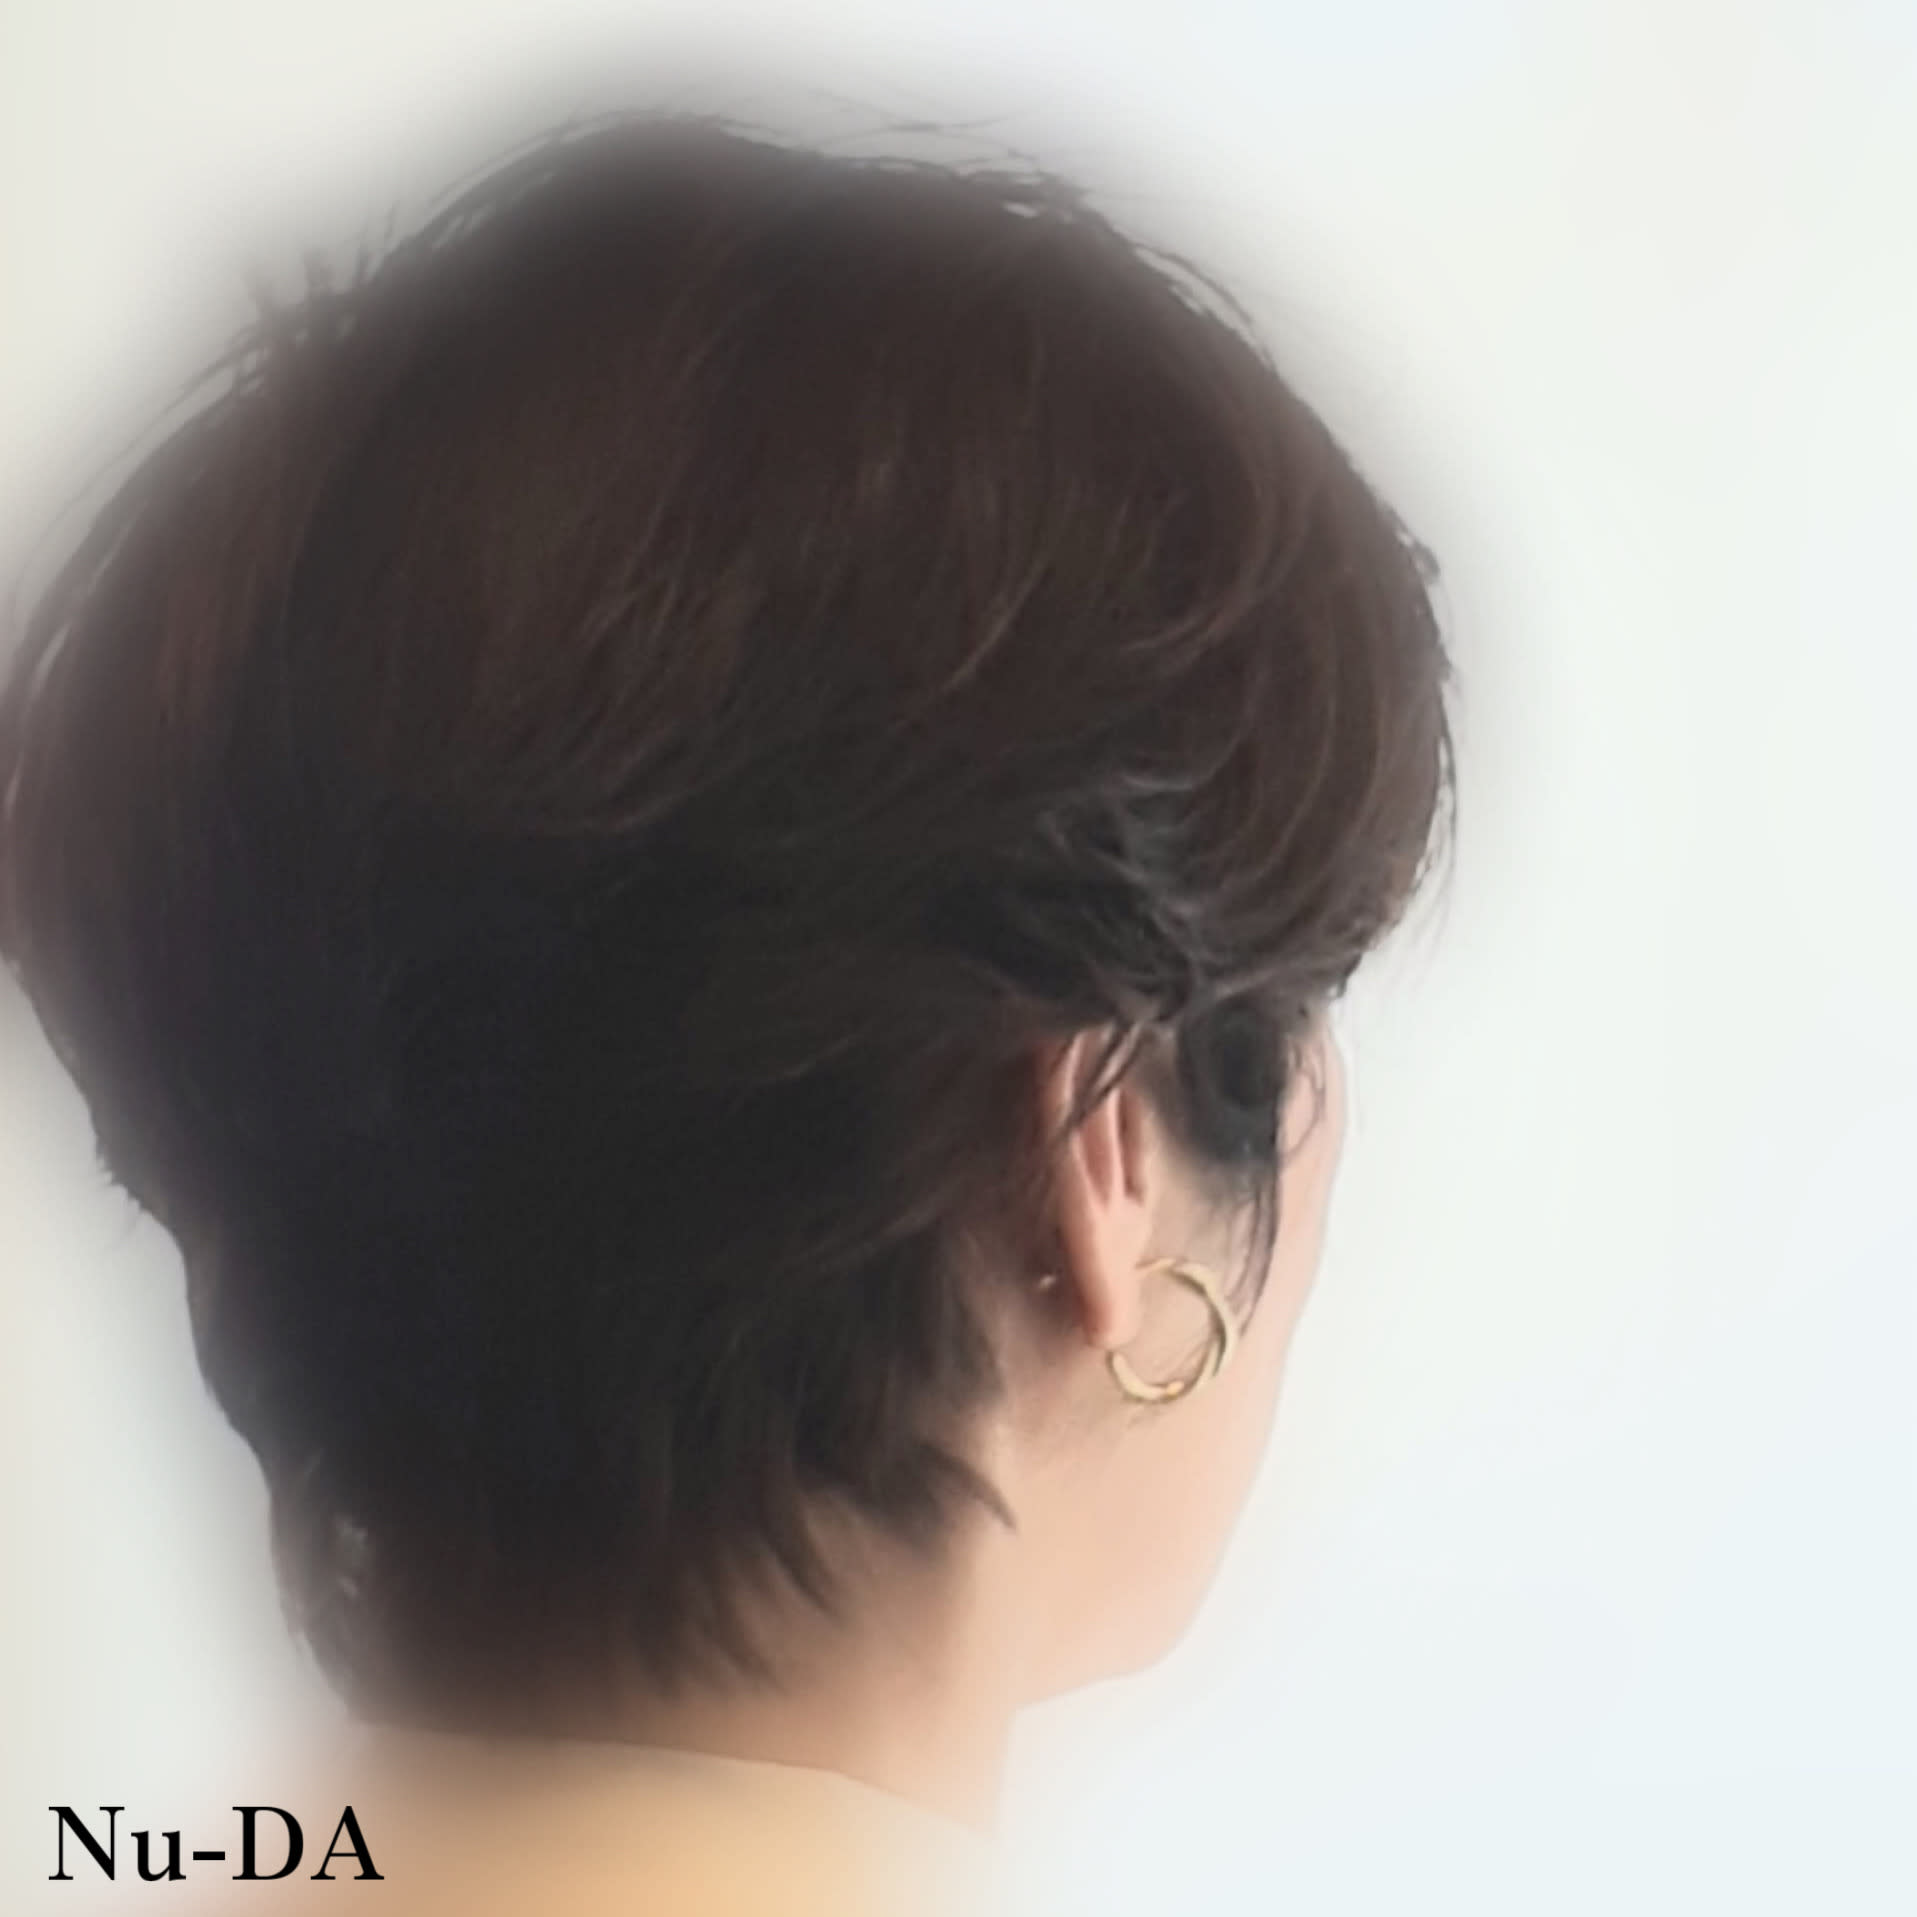 hair Nu-DA【ヘアヌーダ】のスタイル紹介。【Nu-DA】ショートパーマスタイル◇